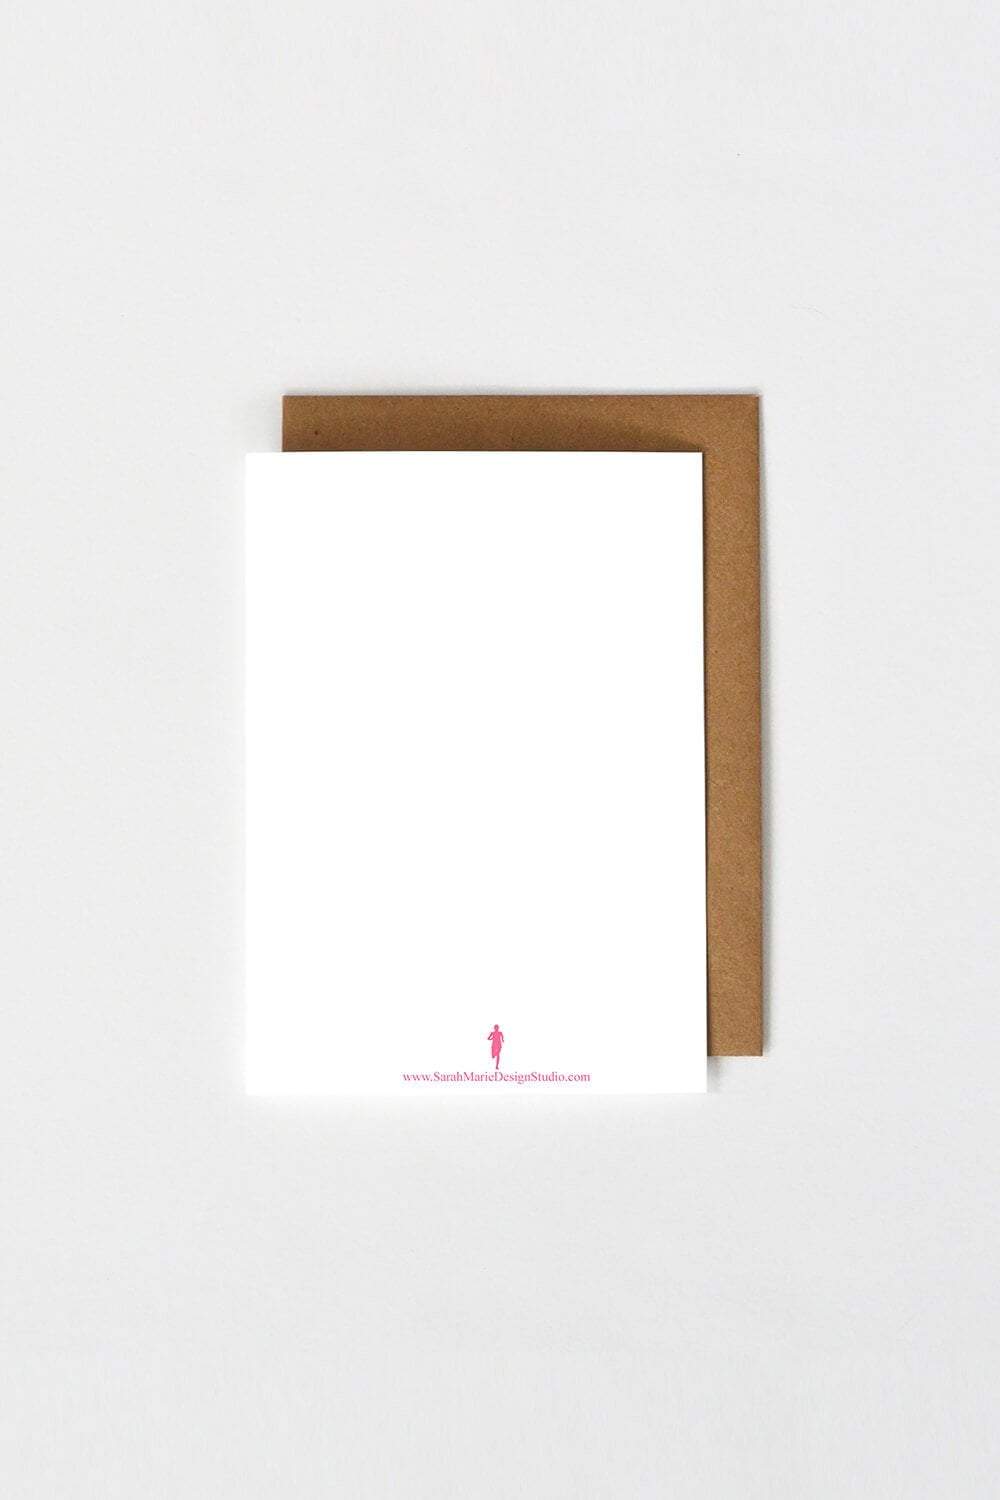 Long Run Love Card - Sarah Marie Design Studio